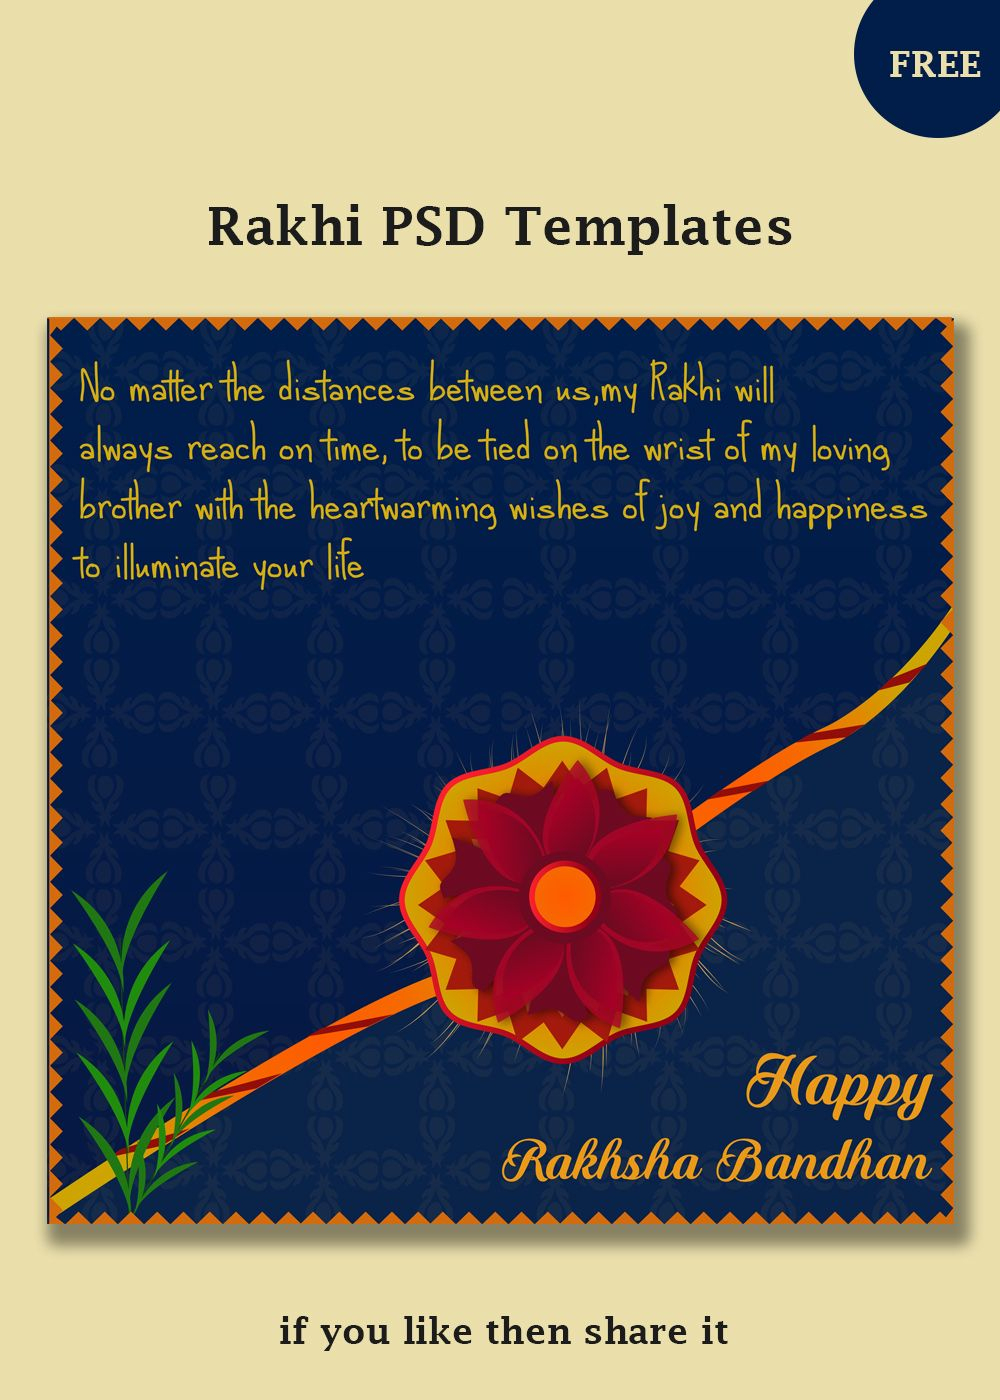 Free Rakhi Vector Templates | Social Post Design | Templates, Rakhi - Free Online Printable Rakhi Cards